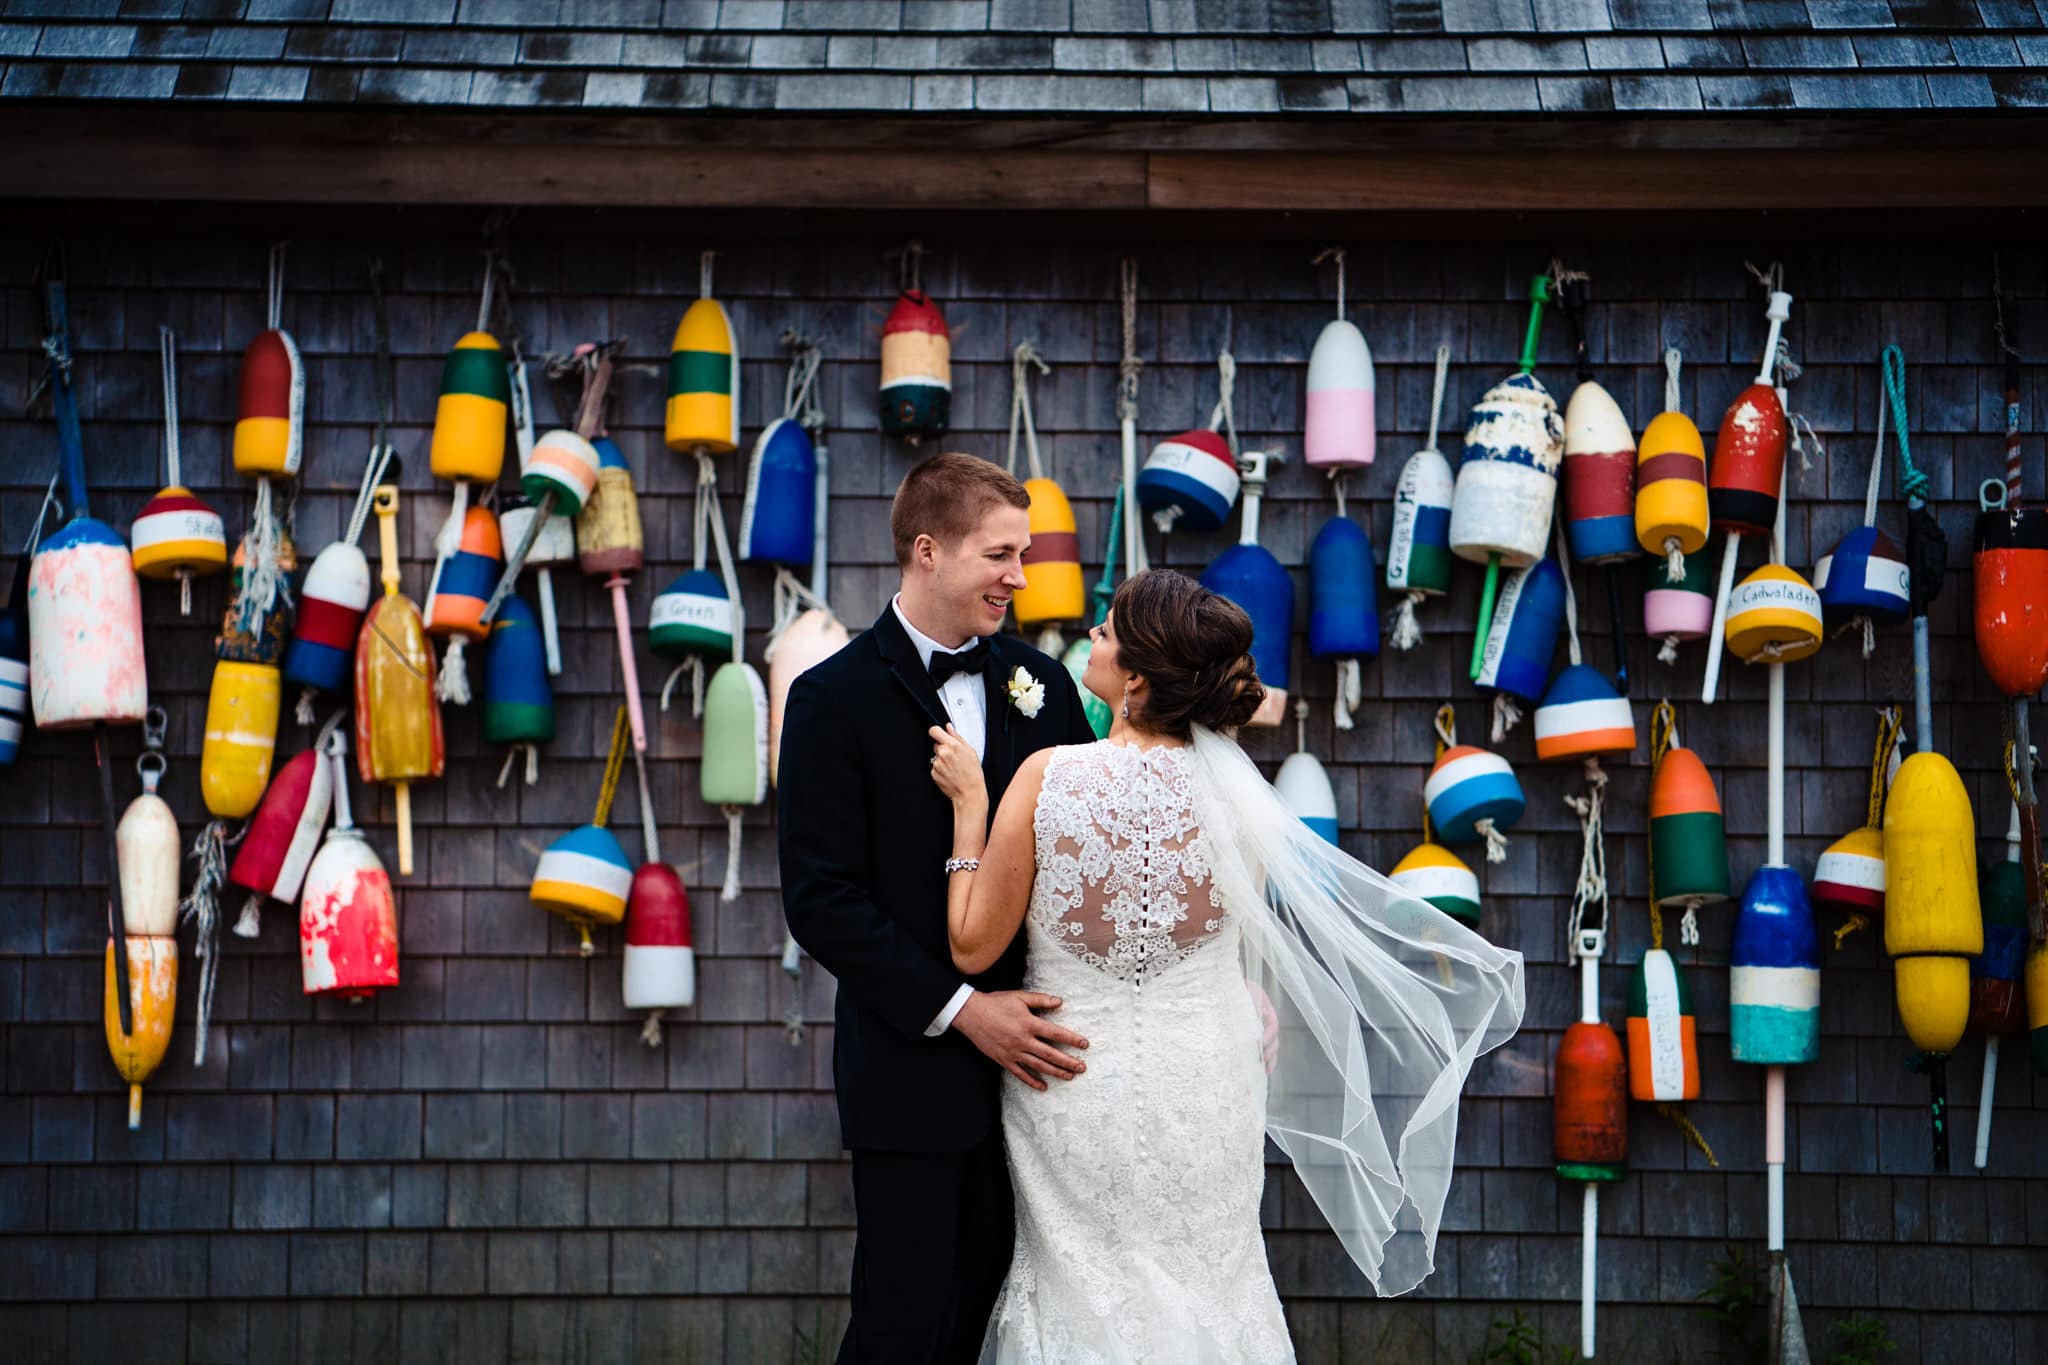 Outdoor Wedding Photos in Boston, Massachusetts or York, Maine - Studio 22 Photography